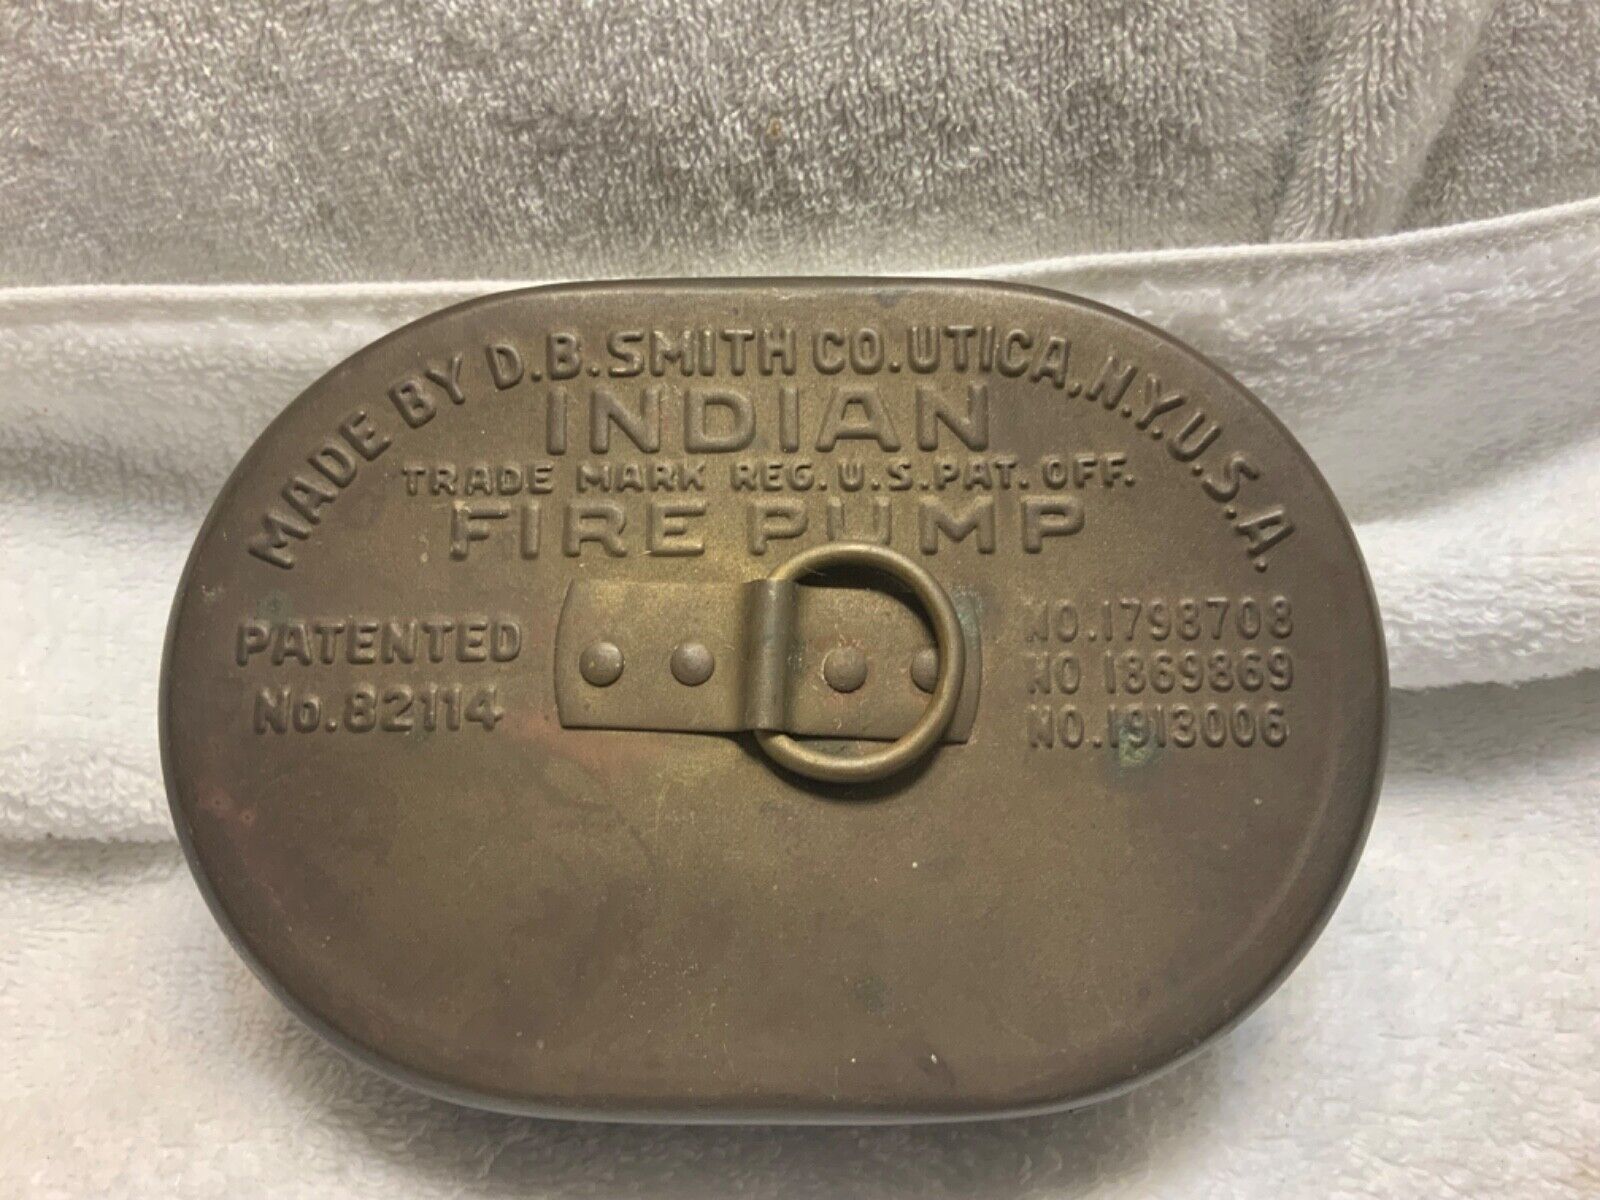 Vintage bronze D.B. Smith Indian Fire Pump box patent 82114 USA